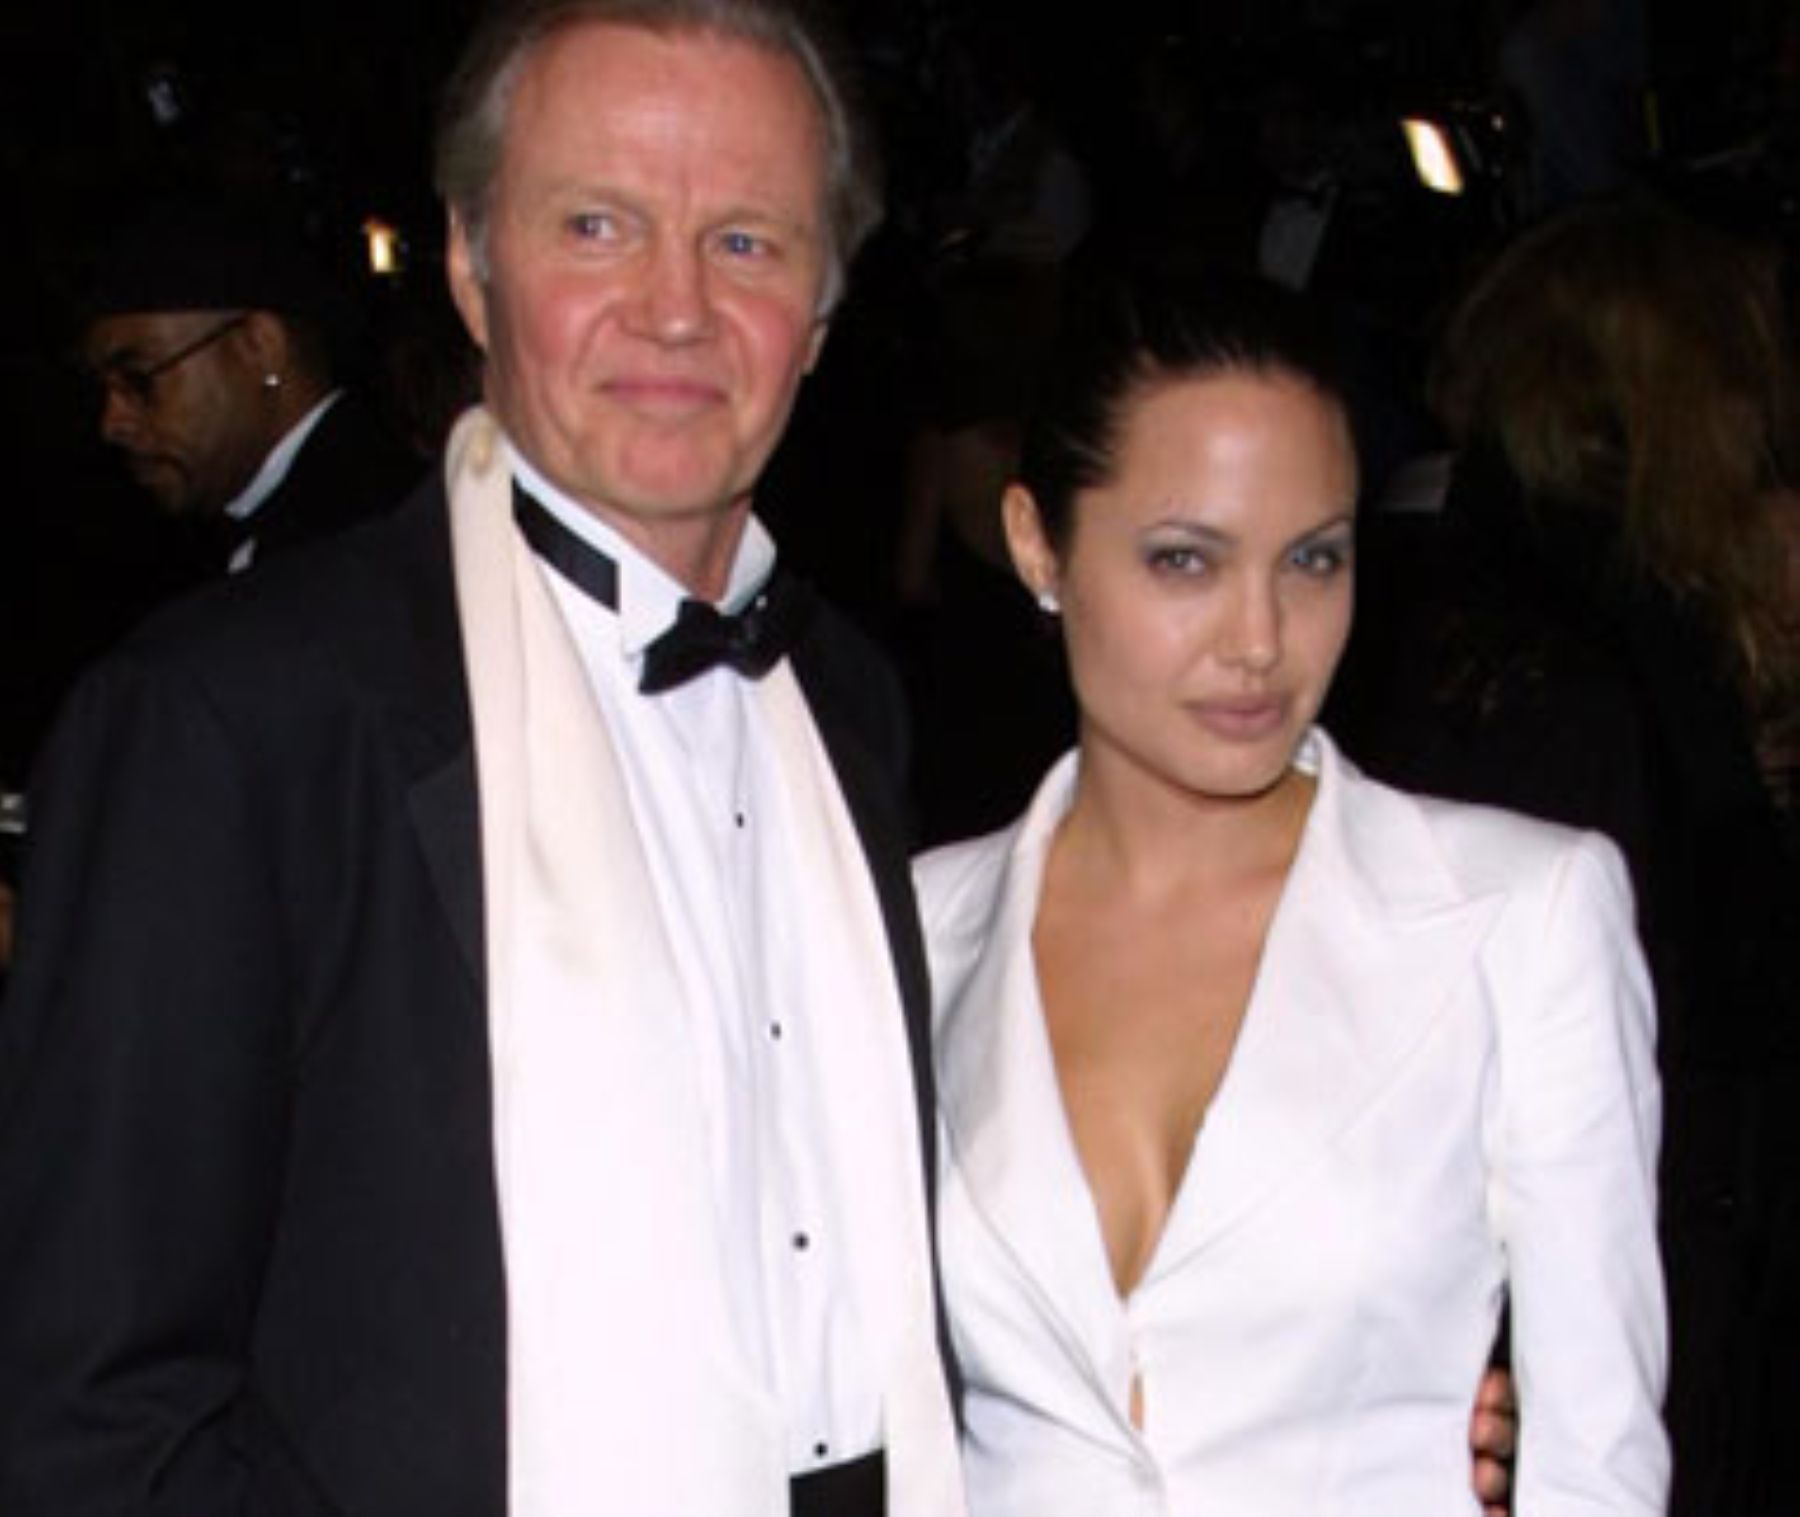 Jon Voight Junto a su hija Angelina Jolie.
 Internet / Medios.